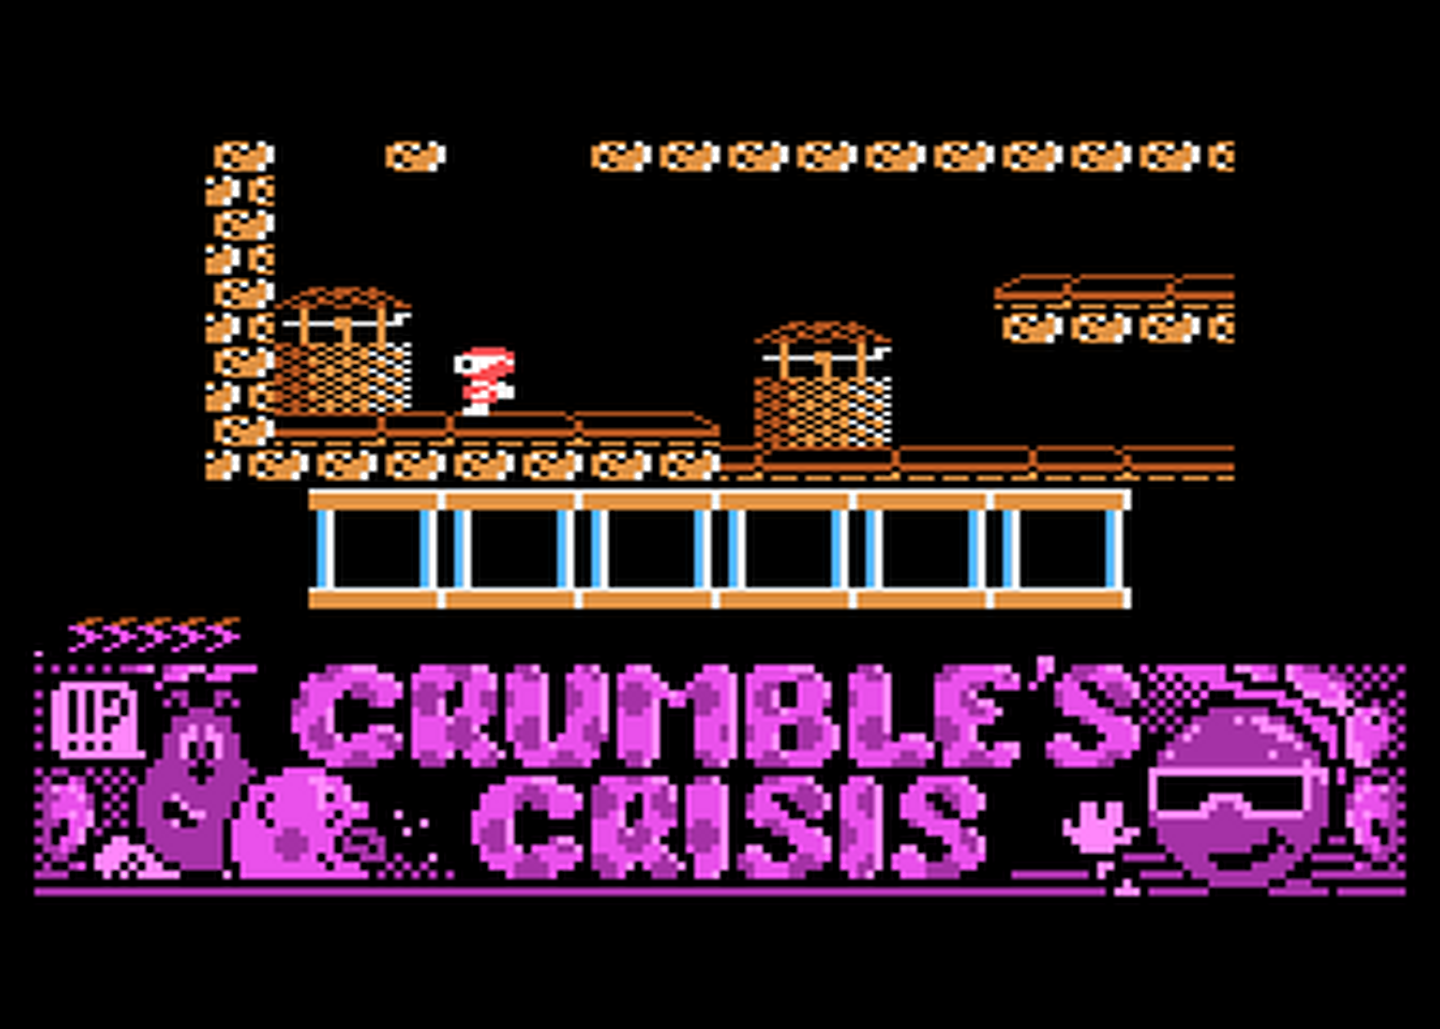 Atari GameBase Crumble's_Crisis Red_Rat_Software 1986